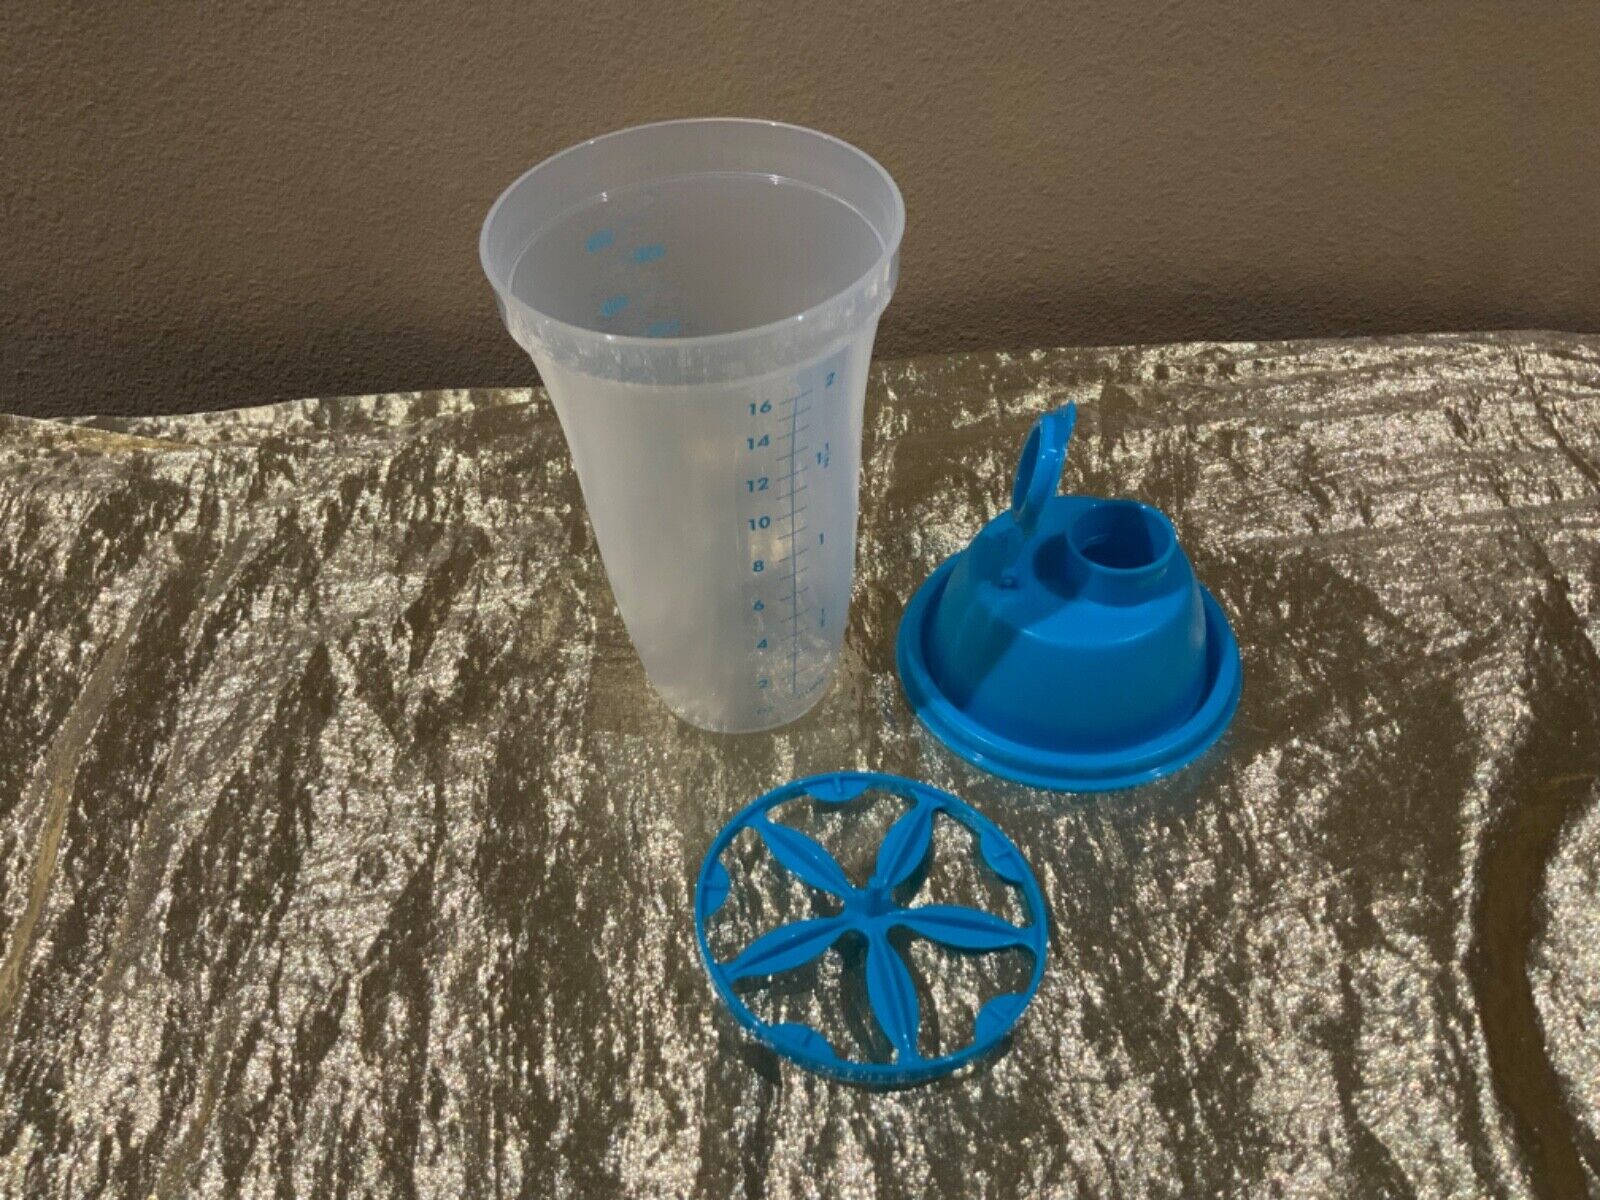 New UNIQUE Tupperware Quick Shake Shaker Blender in Aqua Color in 2 cups